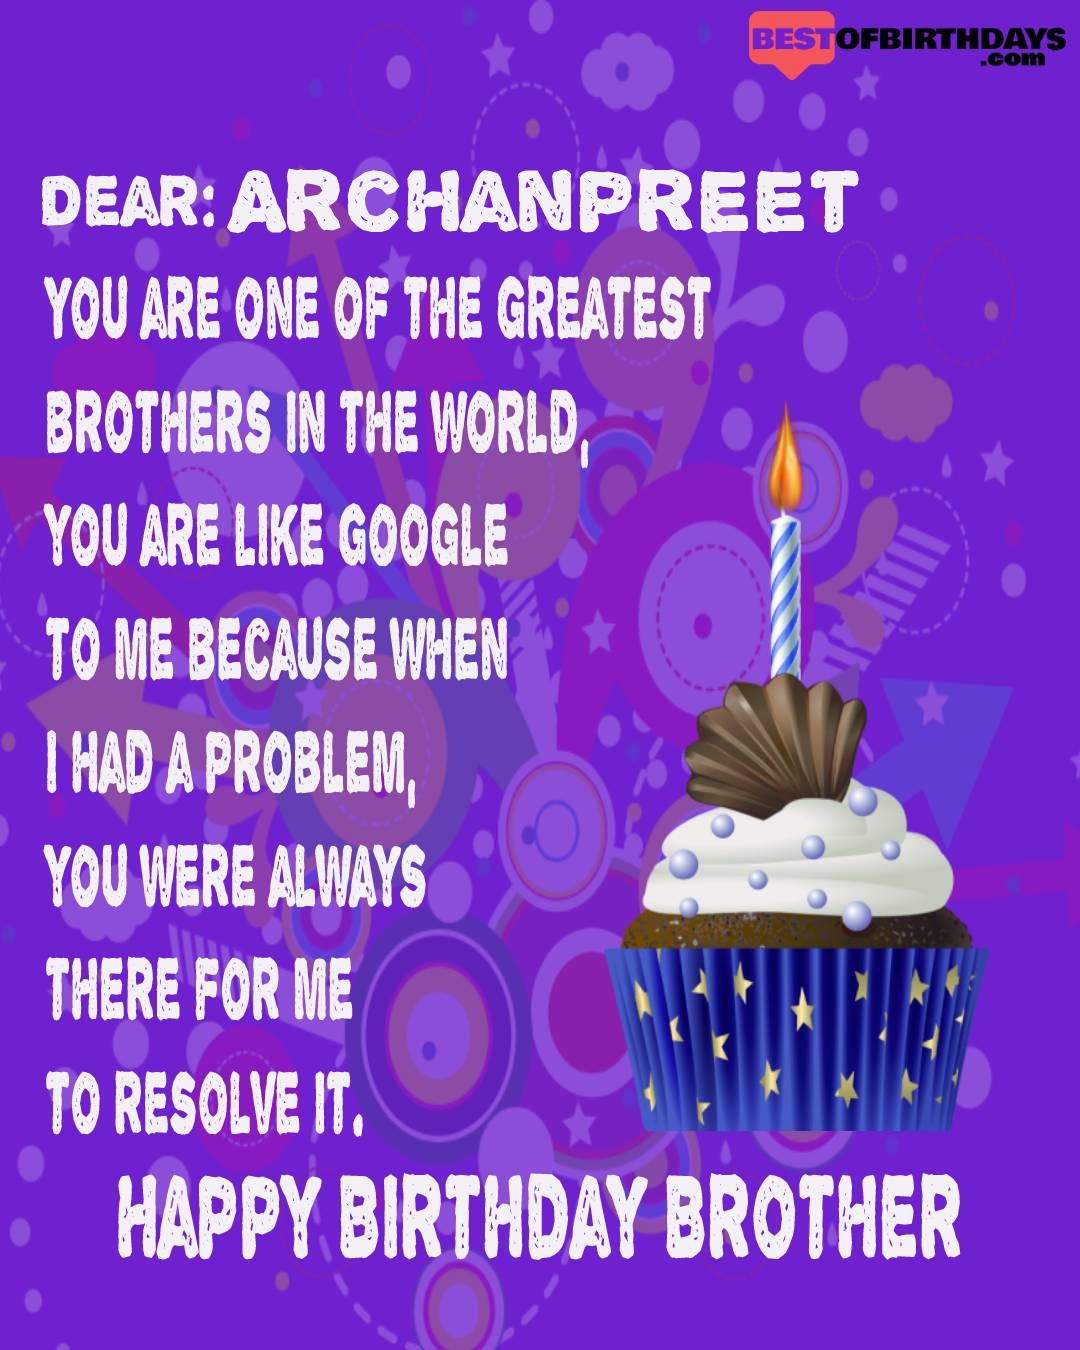 Happy birthday archanpreet bhai brother bro